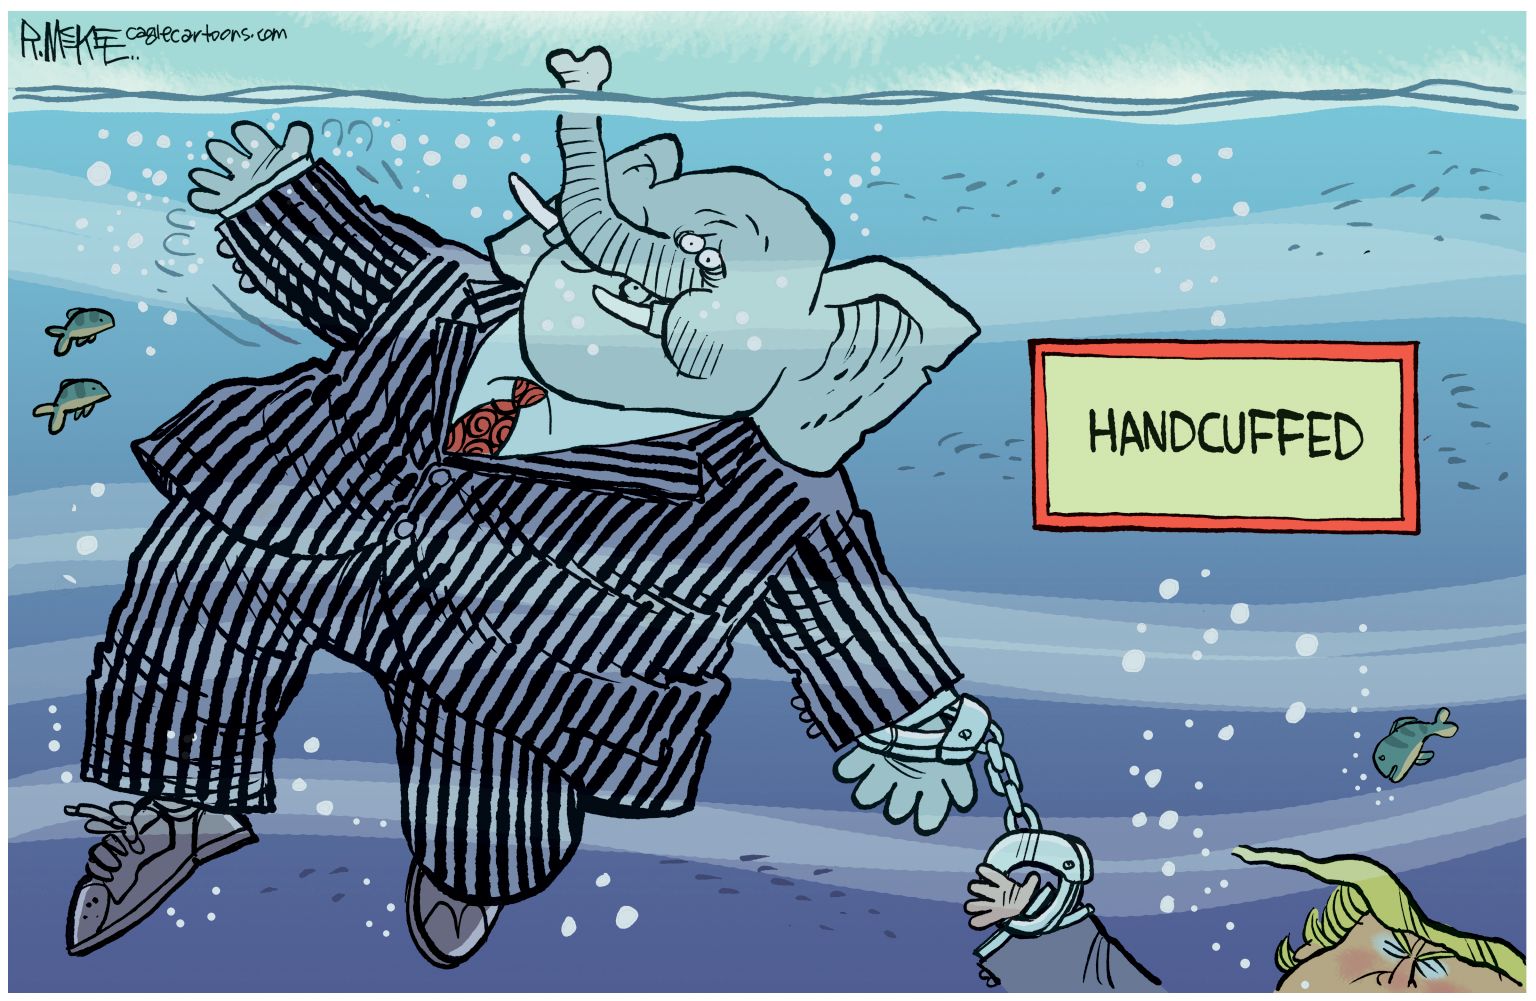 GOP Handcuffed - newsjustin.press - editorial political cartoon